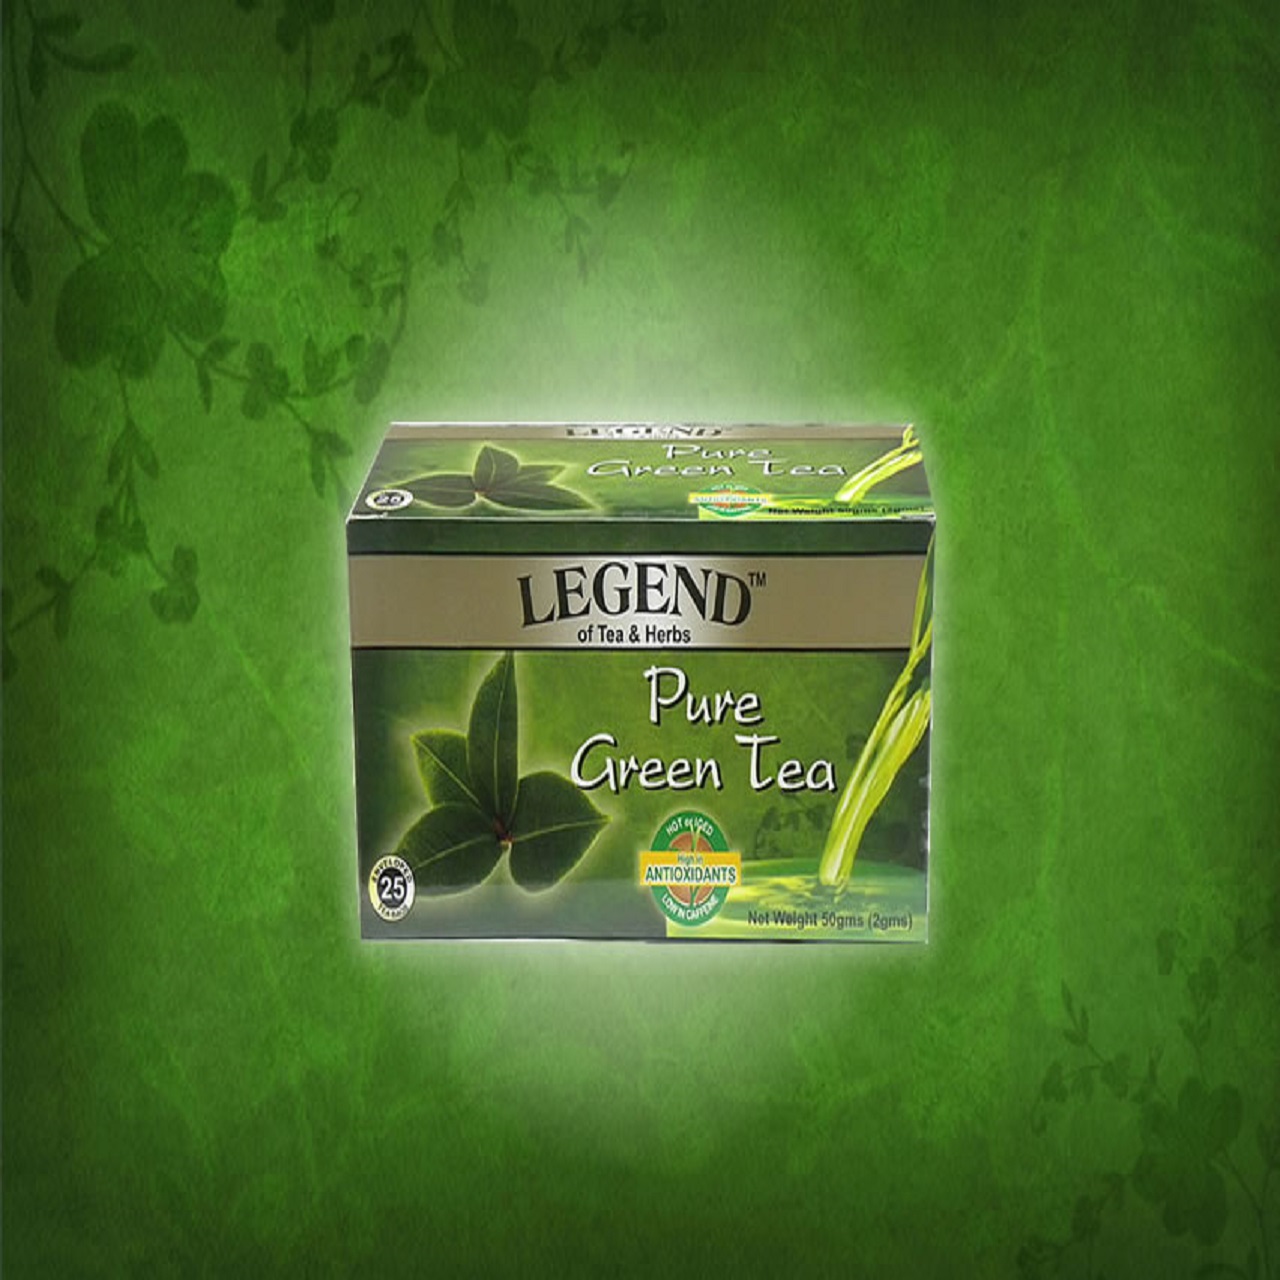 A carton of Legend Green Tea